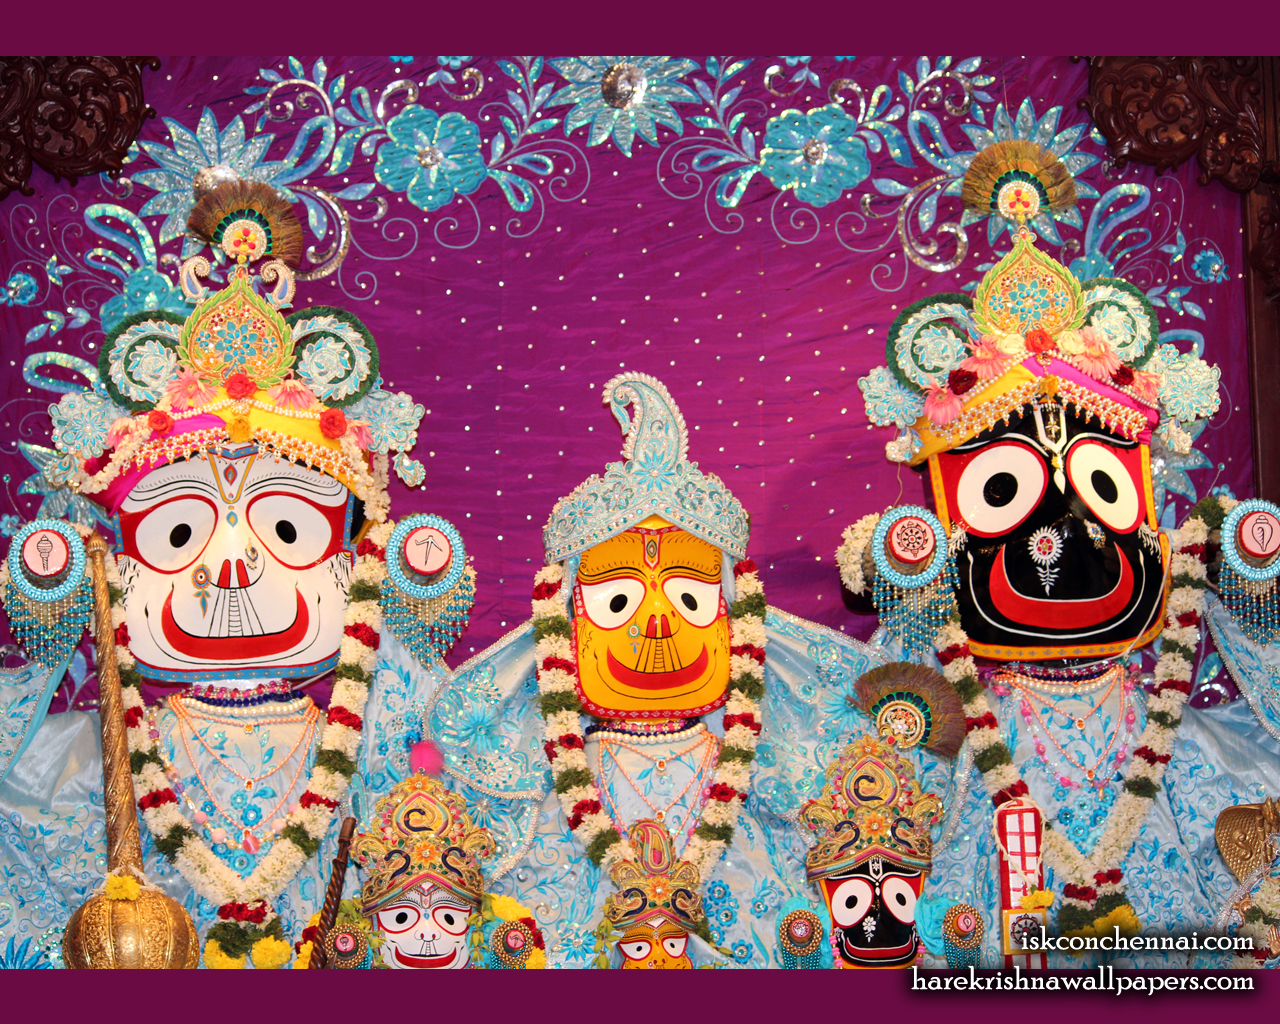 Jagannath Baladeva Subhadra Wallpaper (001) Size 1280x1024 Download